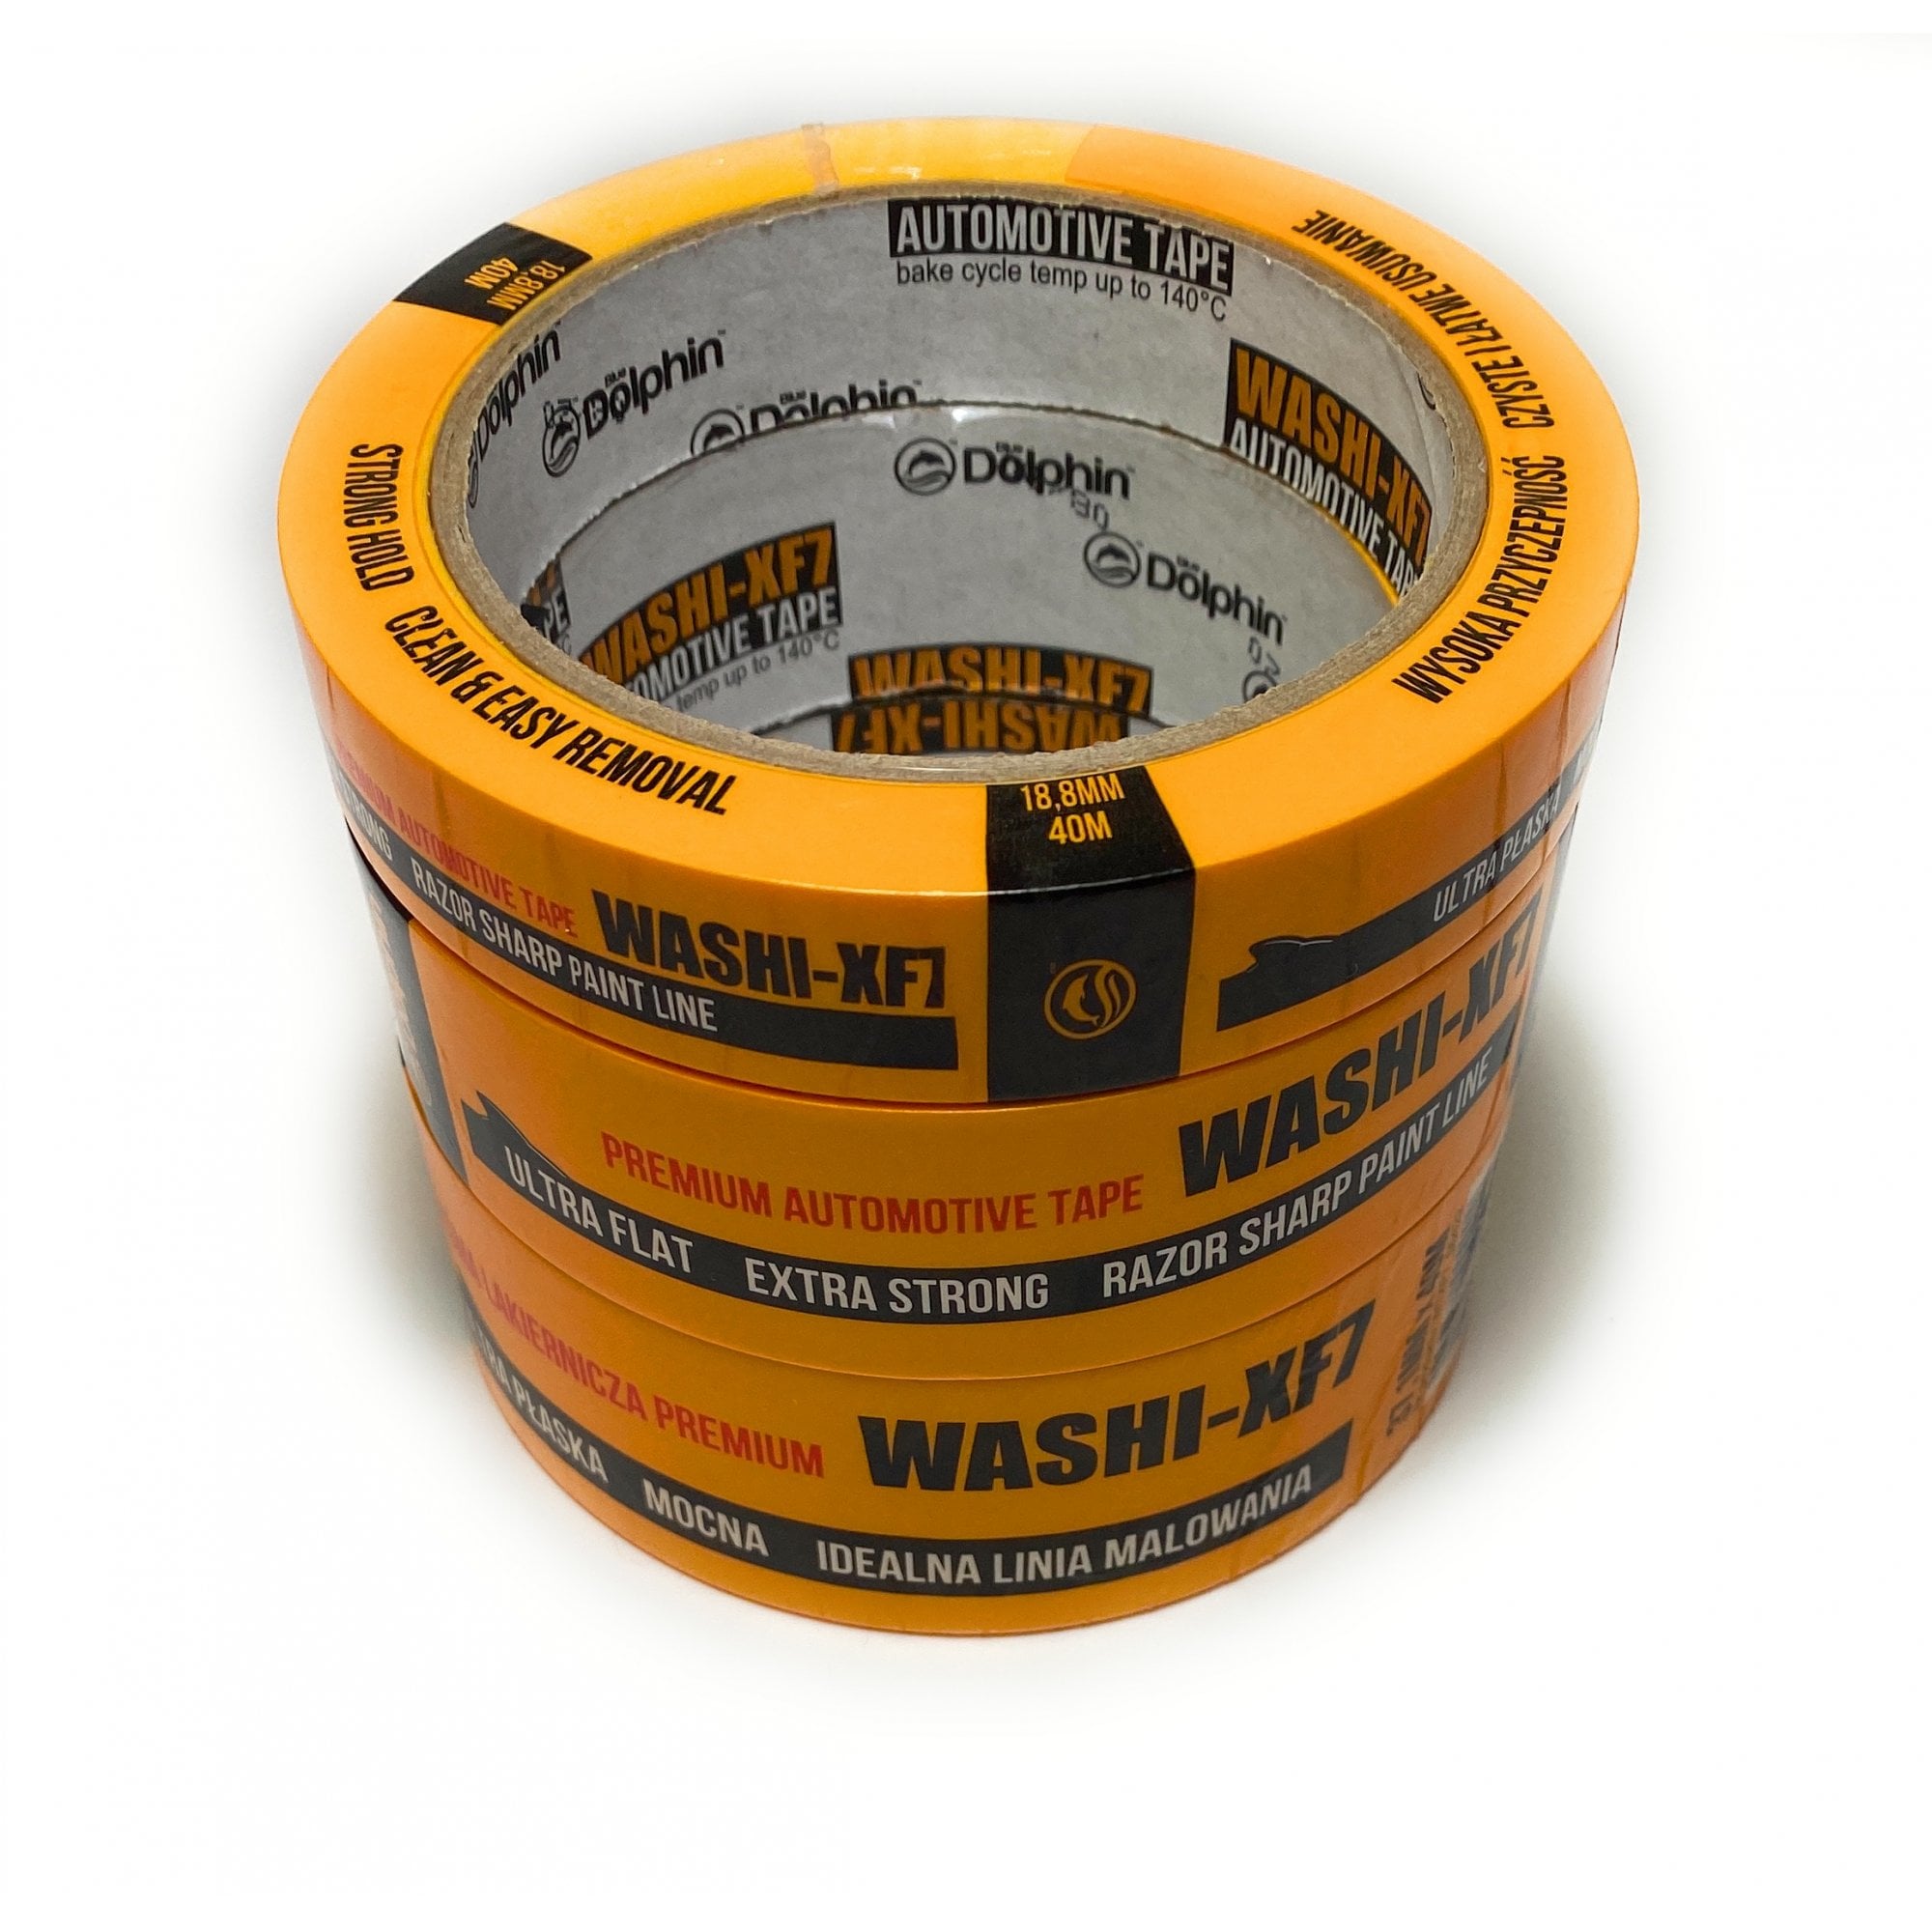 WASHI TAPE - Ultra Premium 140°C Automotive Varnish Tape (37mm x 40m)